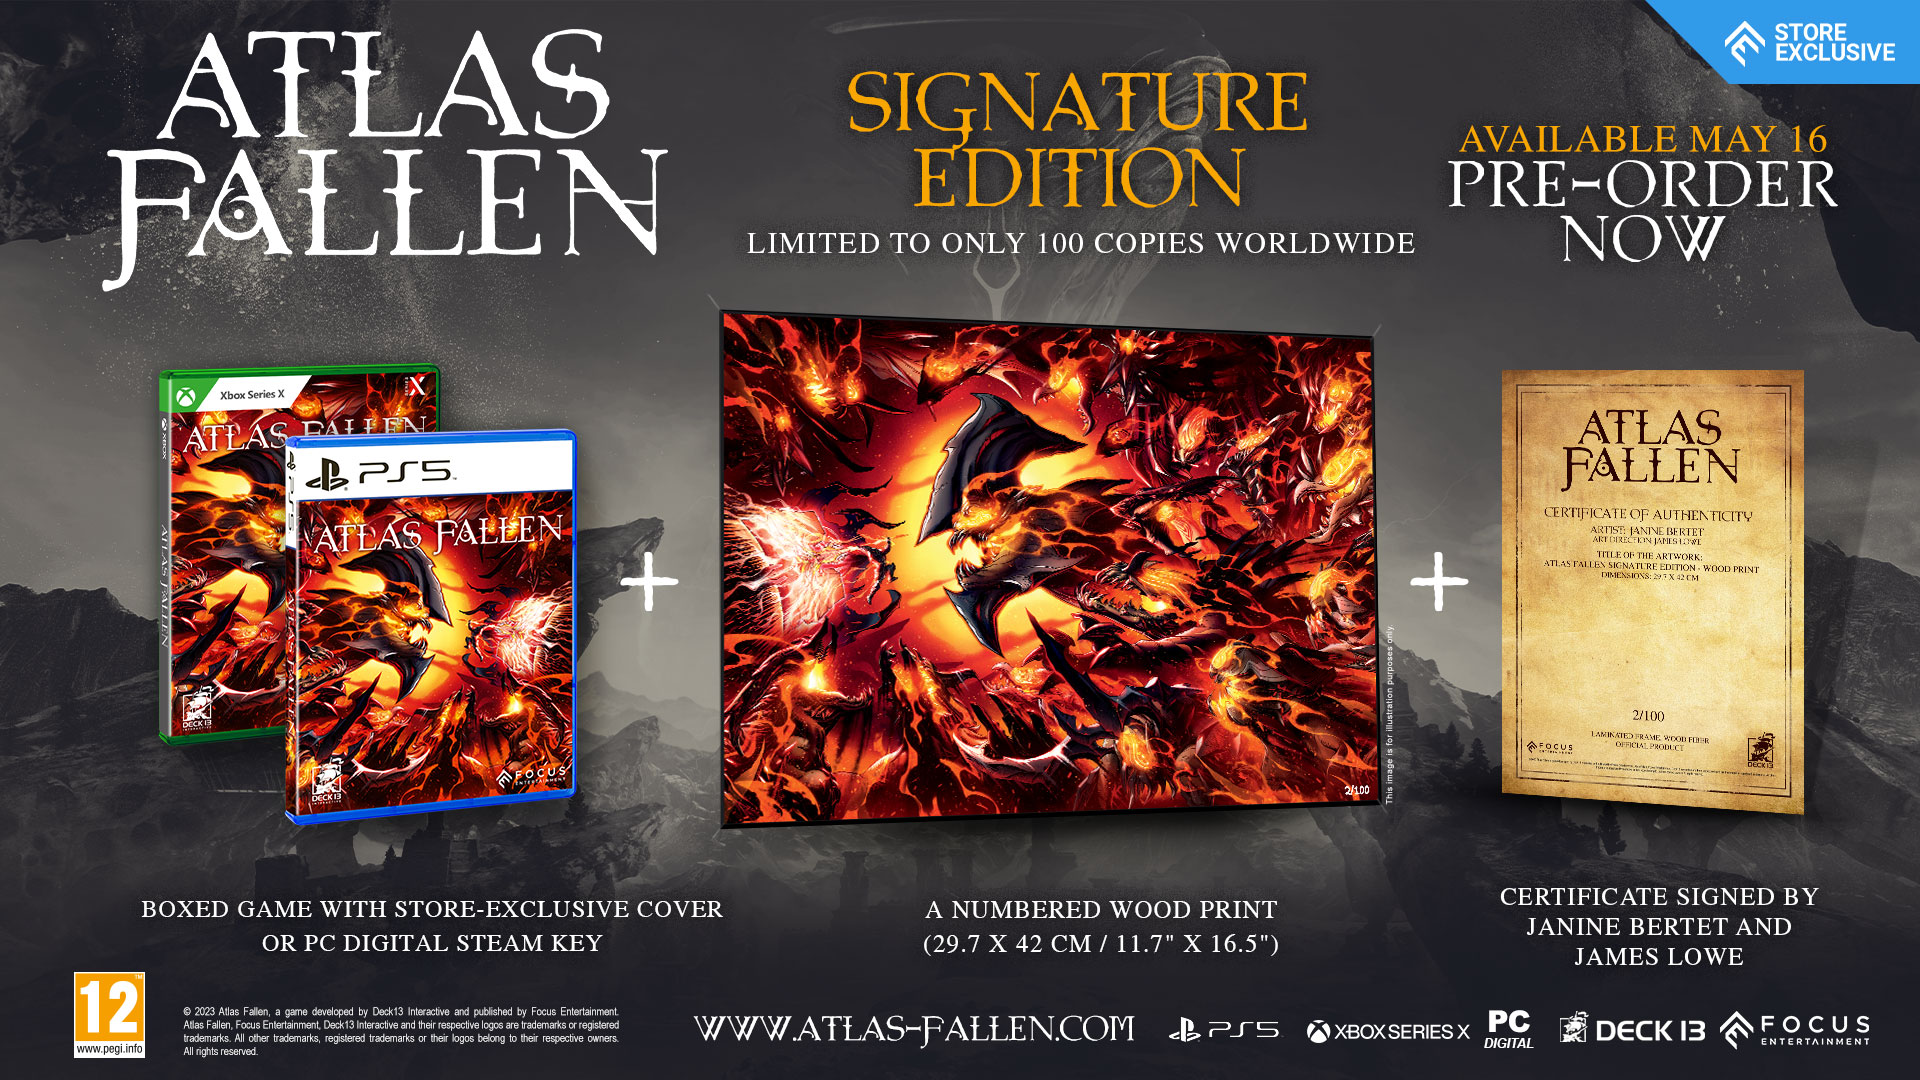 atlas fallen signature edition